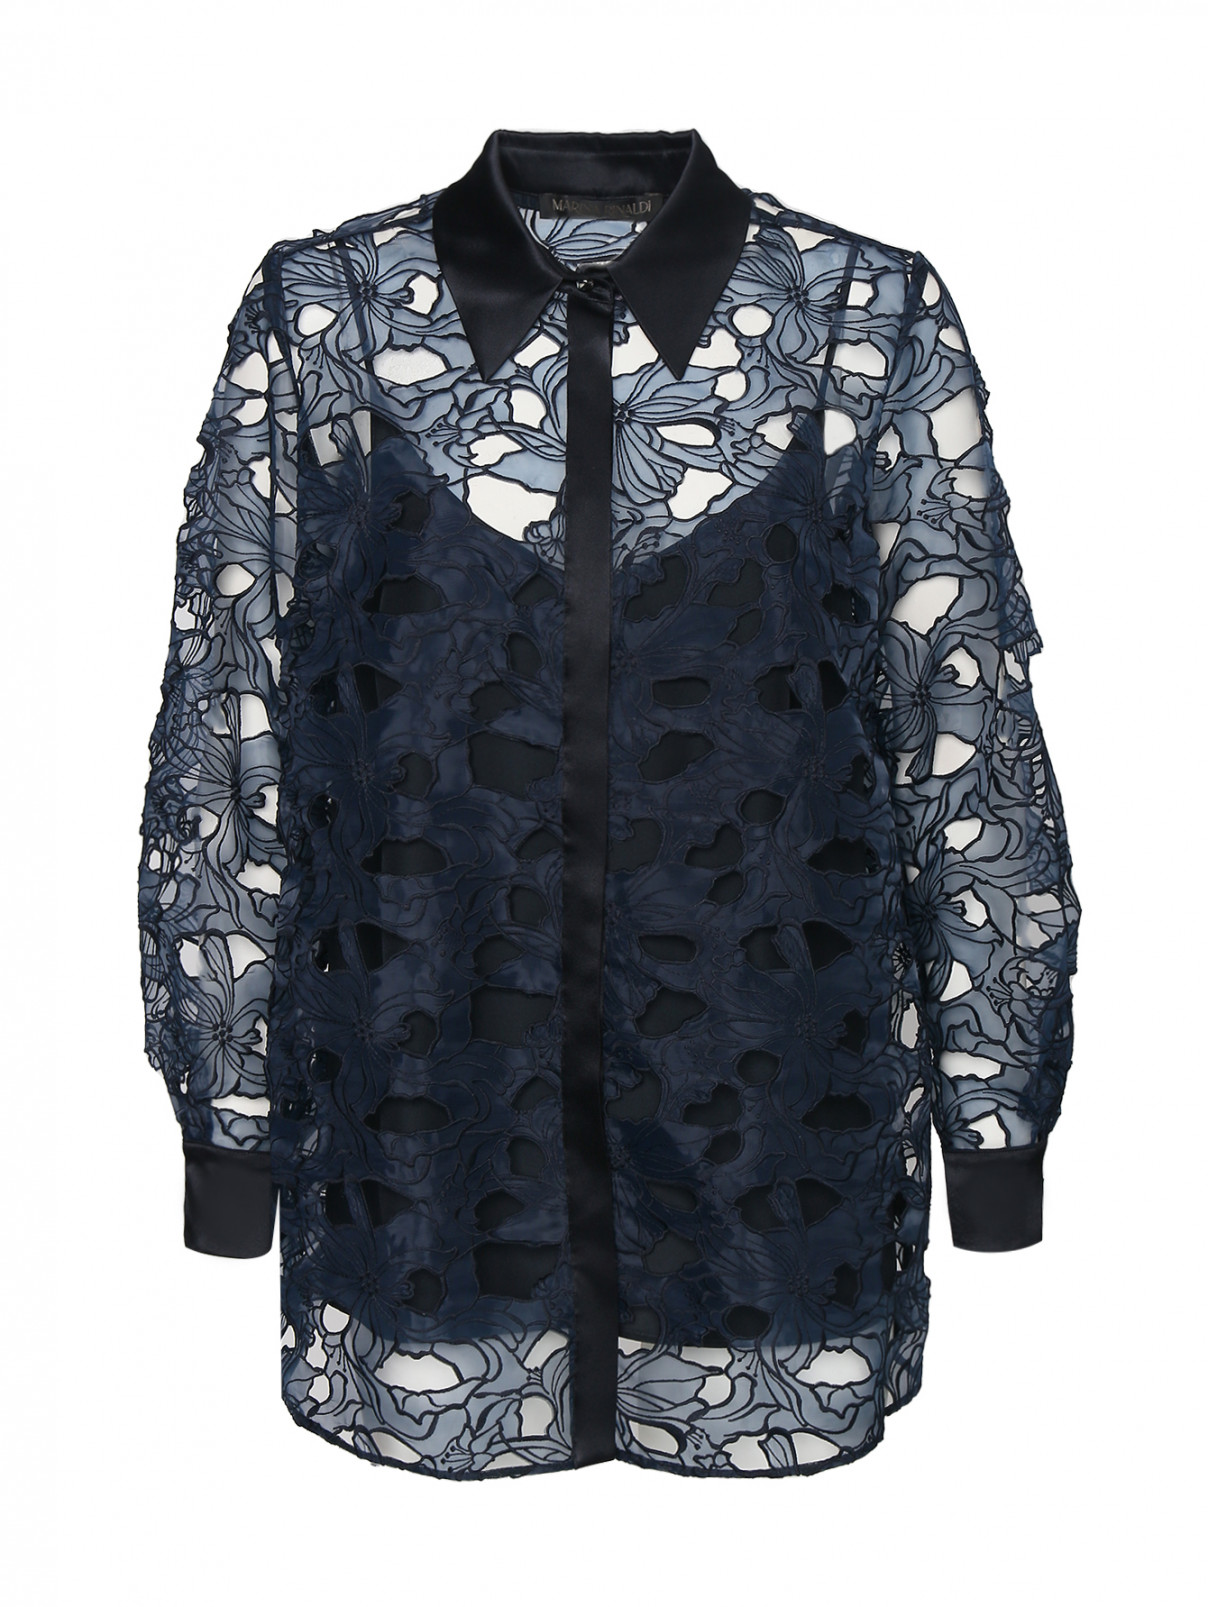 Прозрачная блуза с узором Marina Rinaldi  –  Общий вид  – Цвет:  Синий